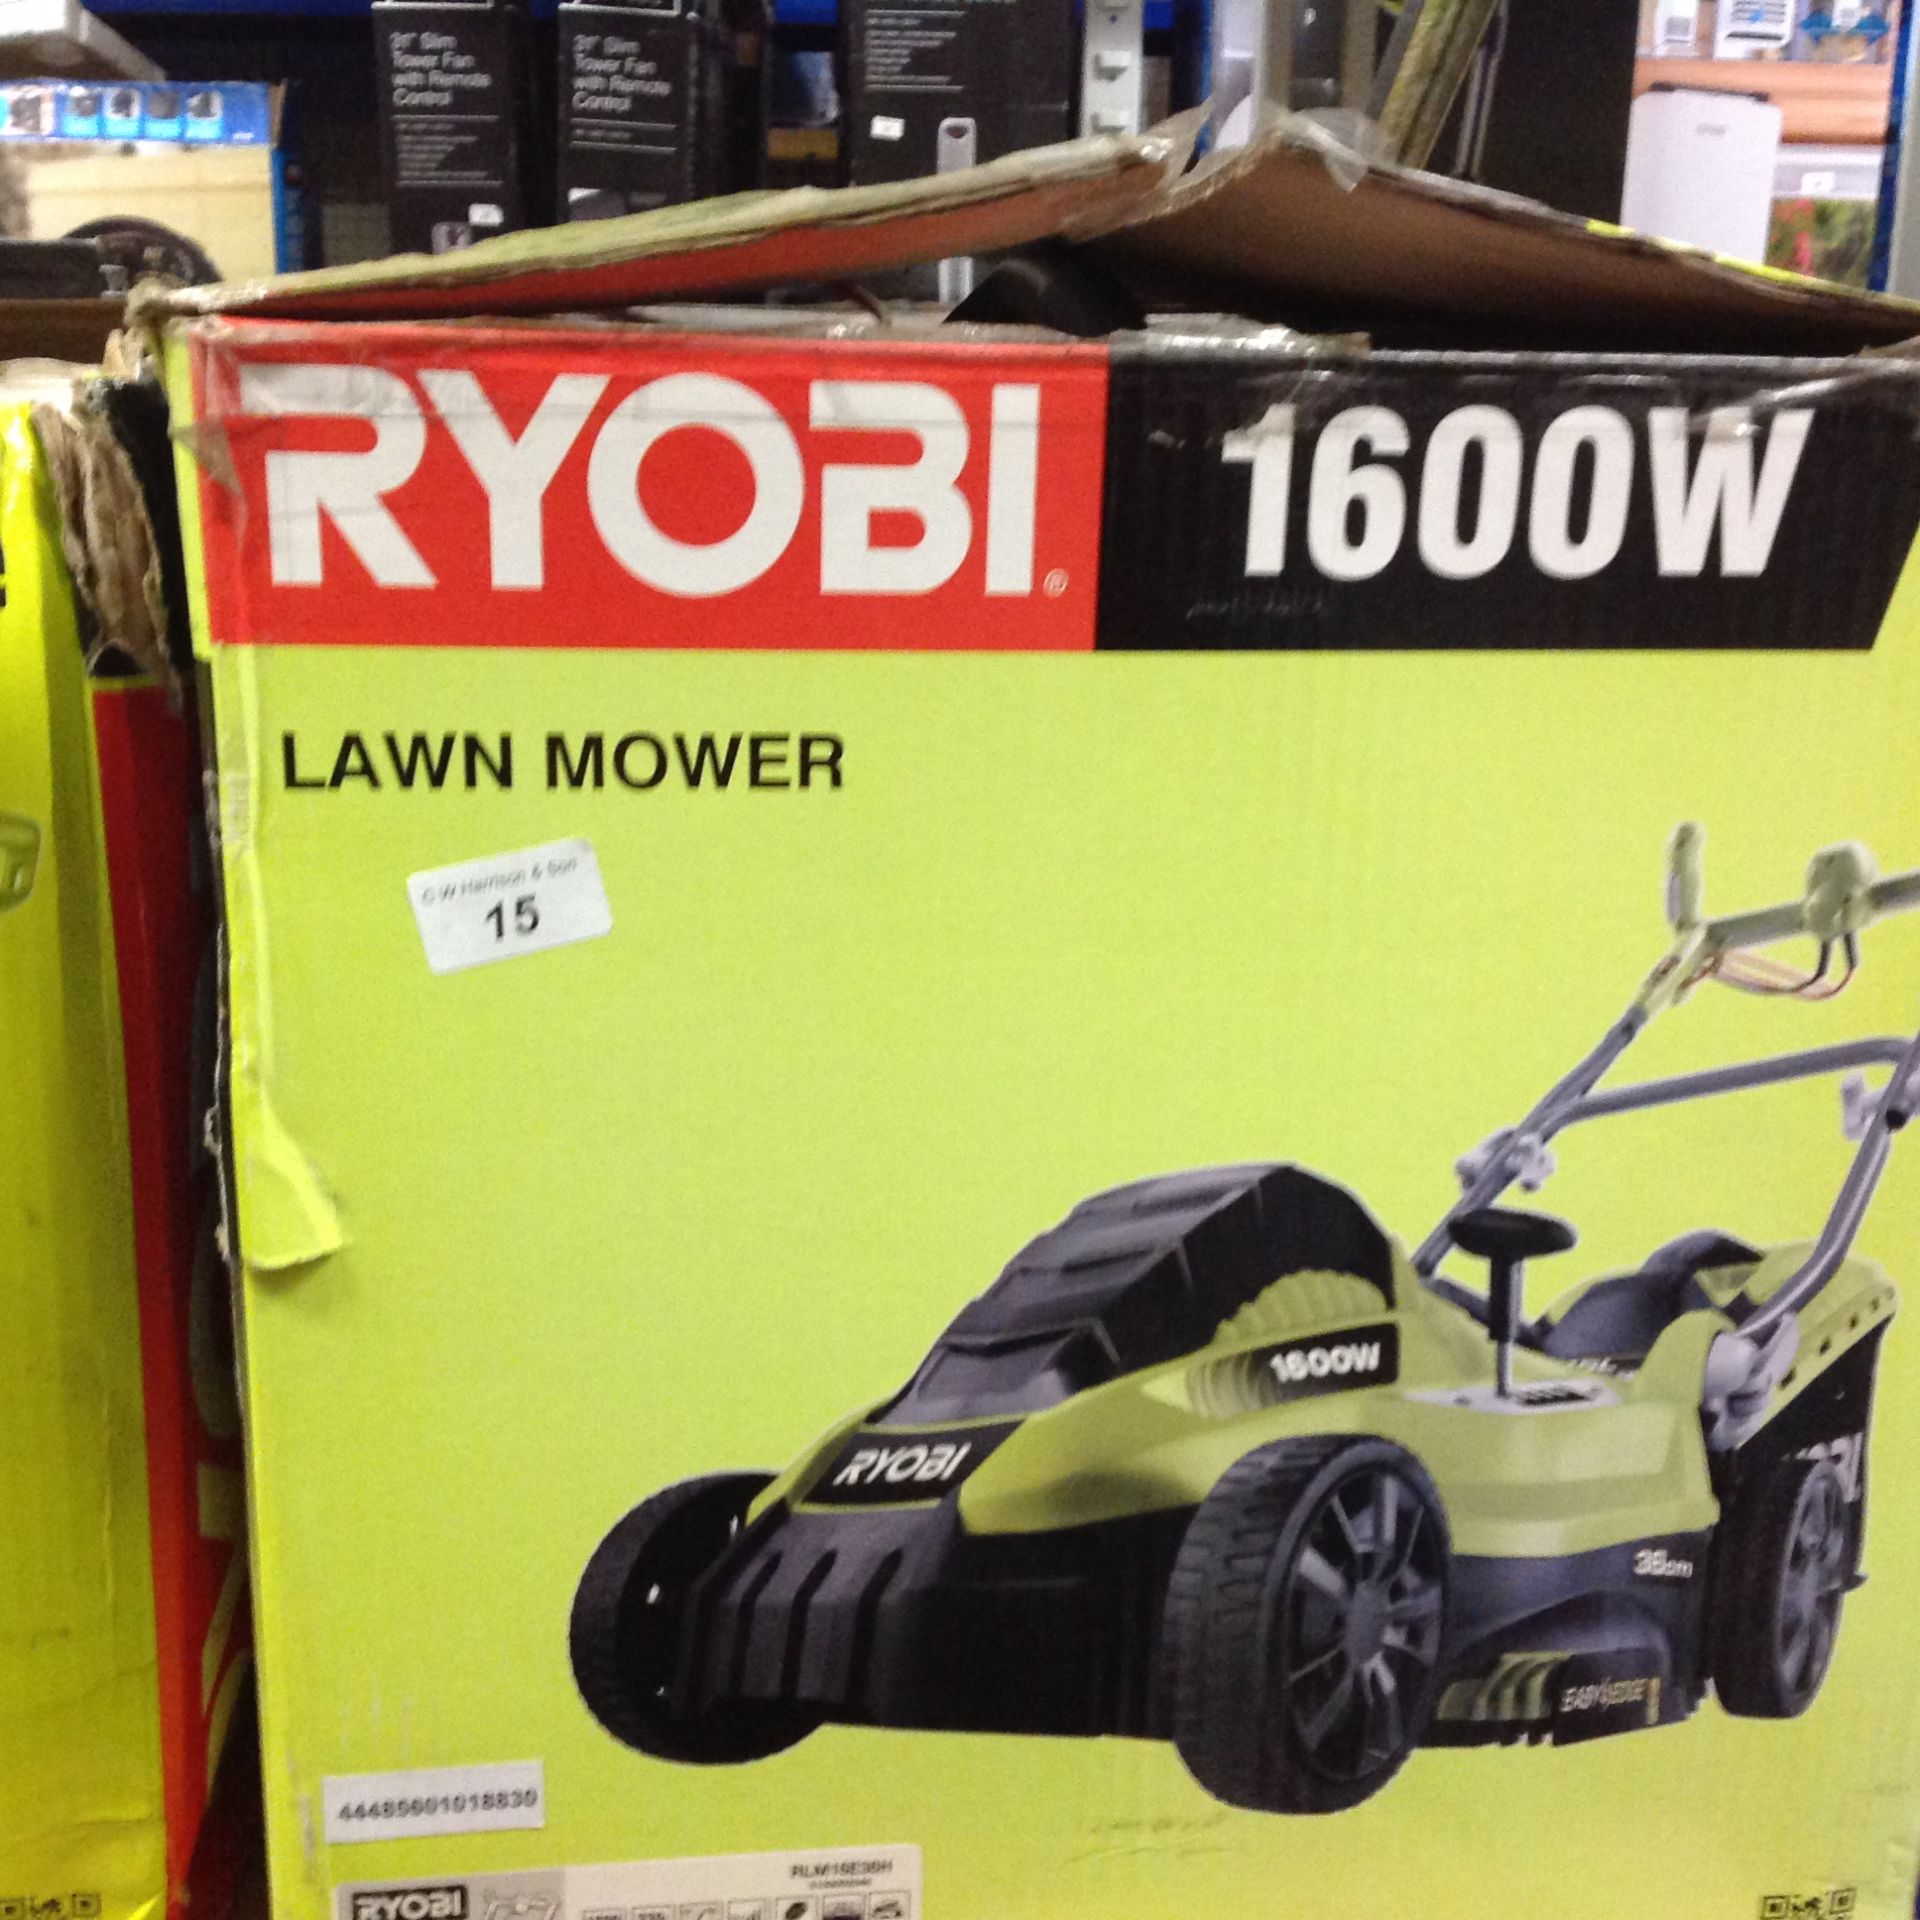 Ryobi 1600w 36cm lawn mower - 240v